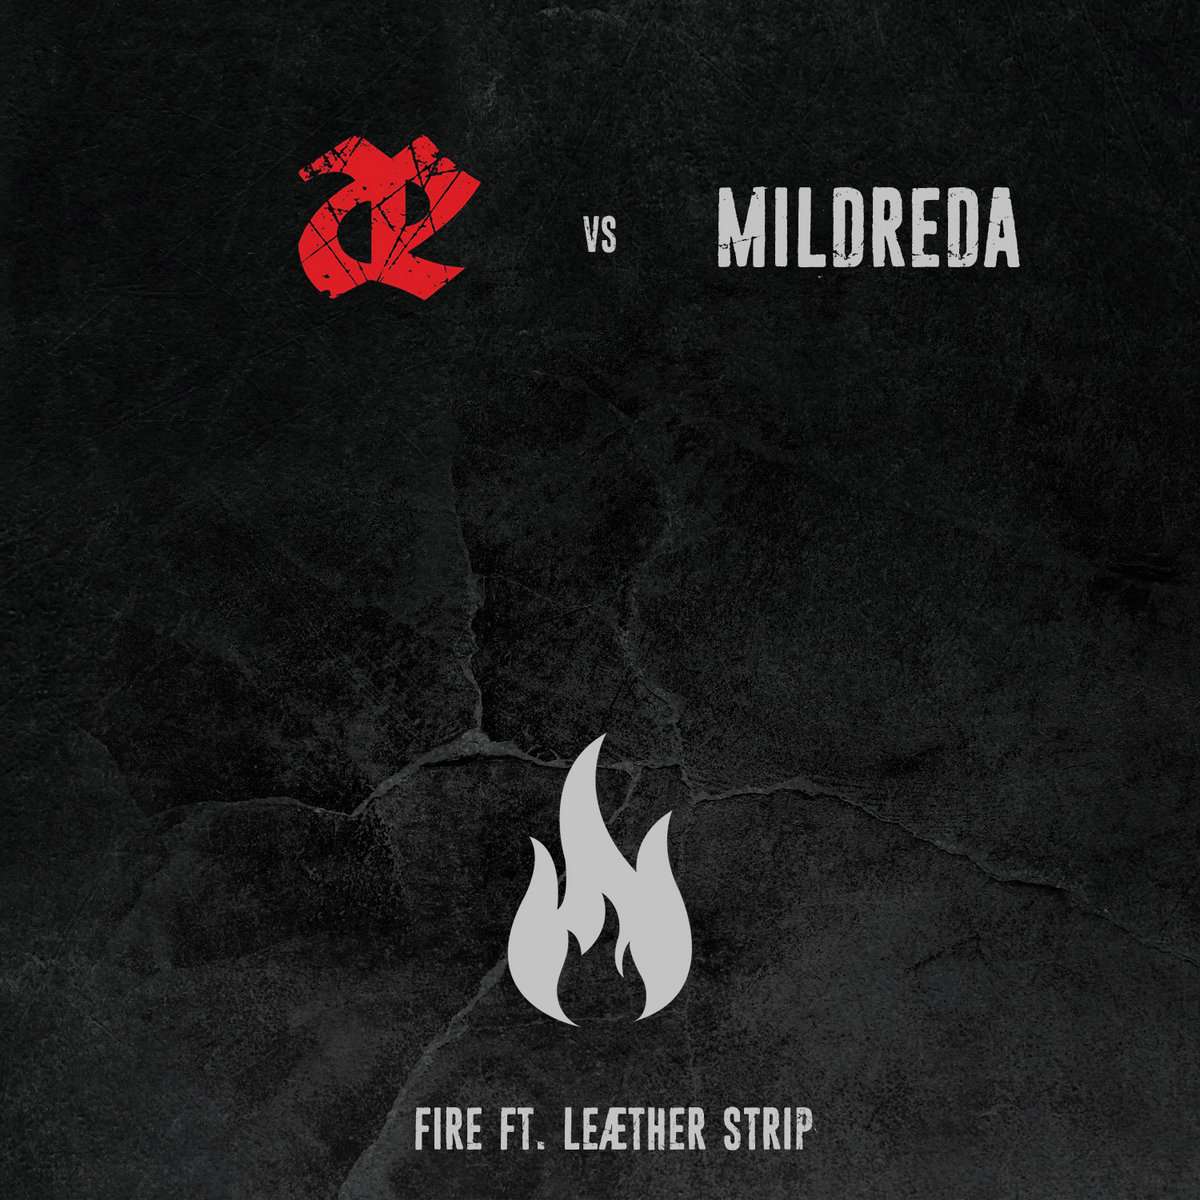 Fire-Mildreda-Leather-Strip